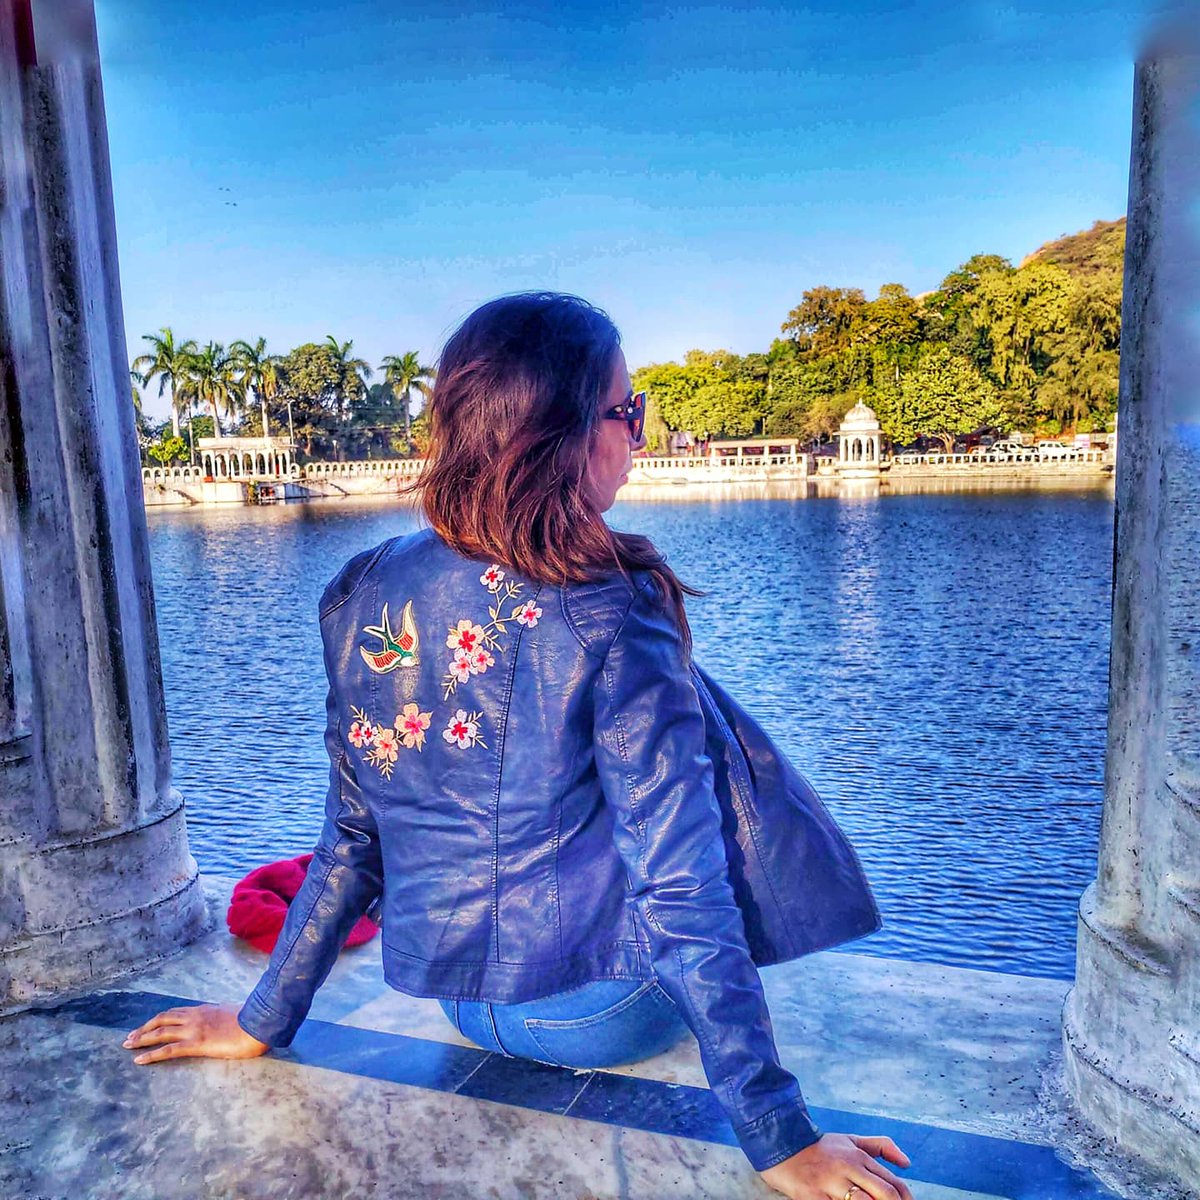 Looking back at 2019 💕
#casuals #casualstyle #casualoutfits #sunset #rajasthan #traveldiaries #traveldiary #bluejacket #water #lake #lakepichola #travelgram #picholalake #river #beautyandfashionfreaks #udaipur #udaipurdiaries #fashion #instafashion #fashionblog